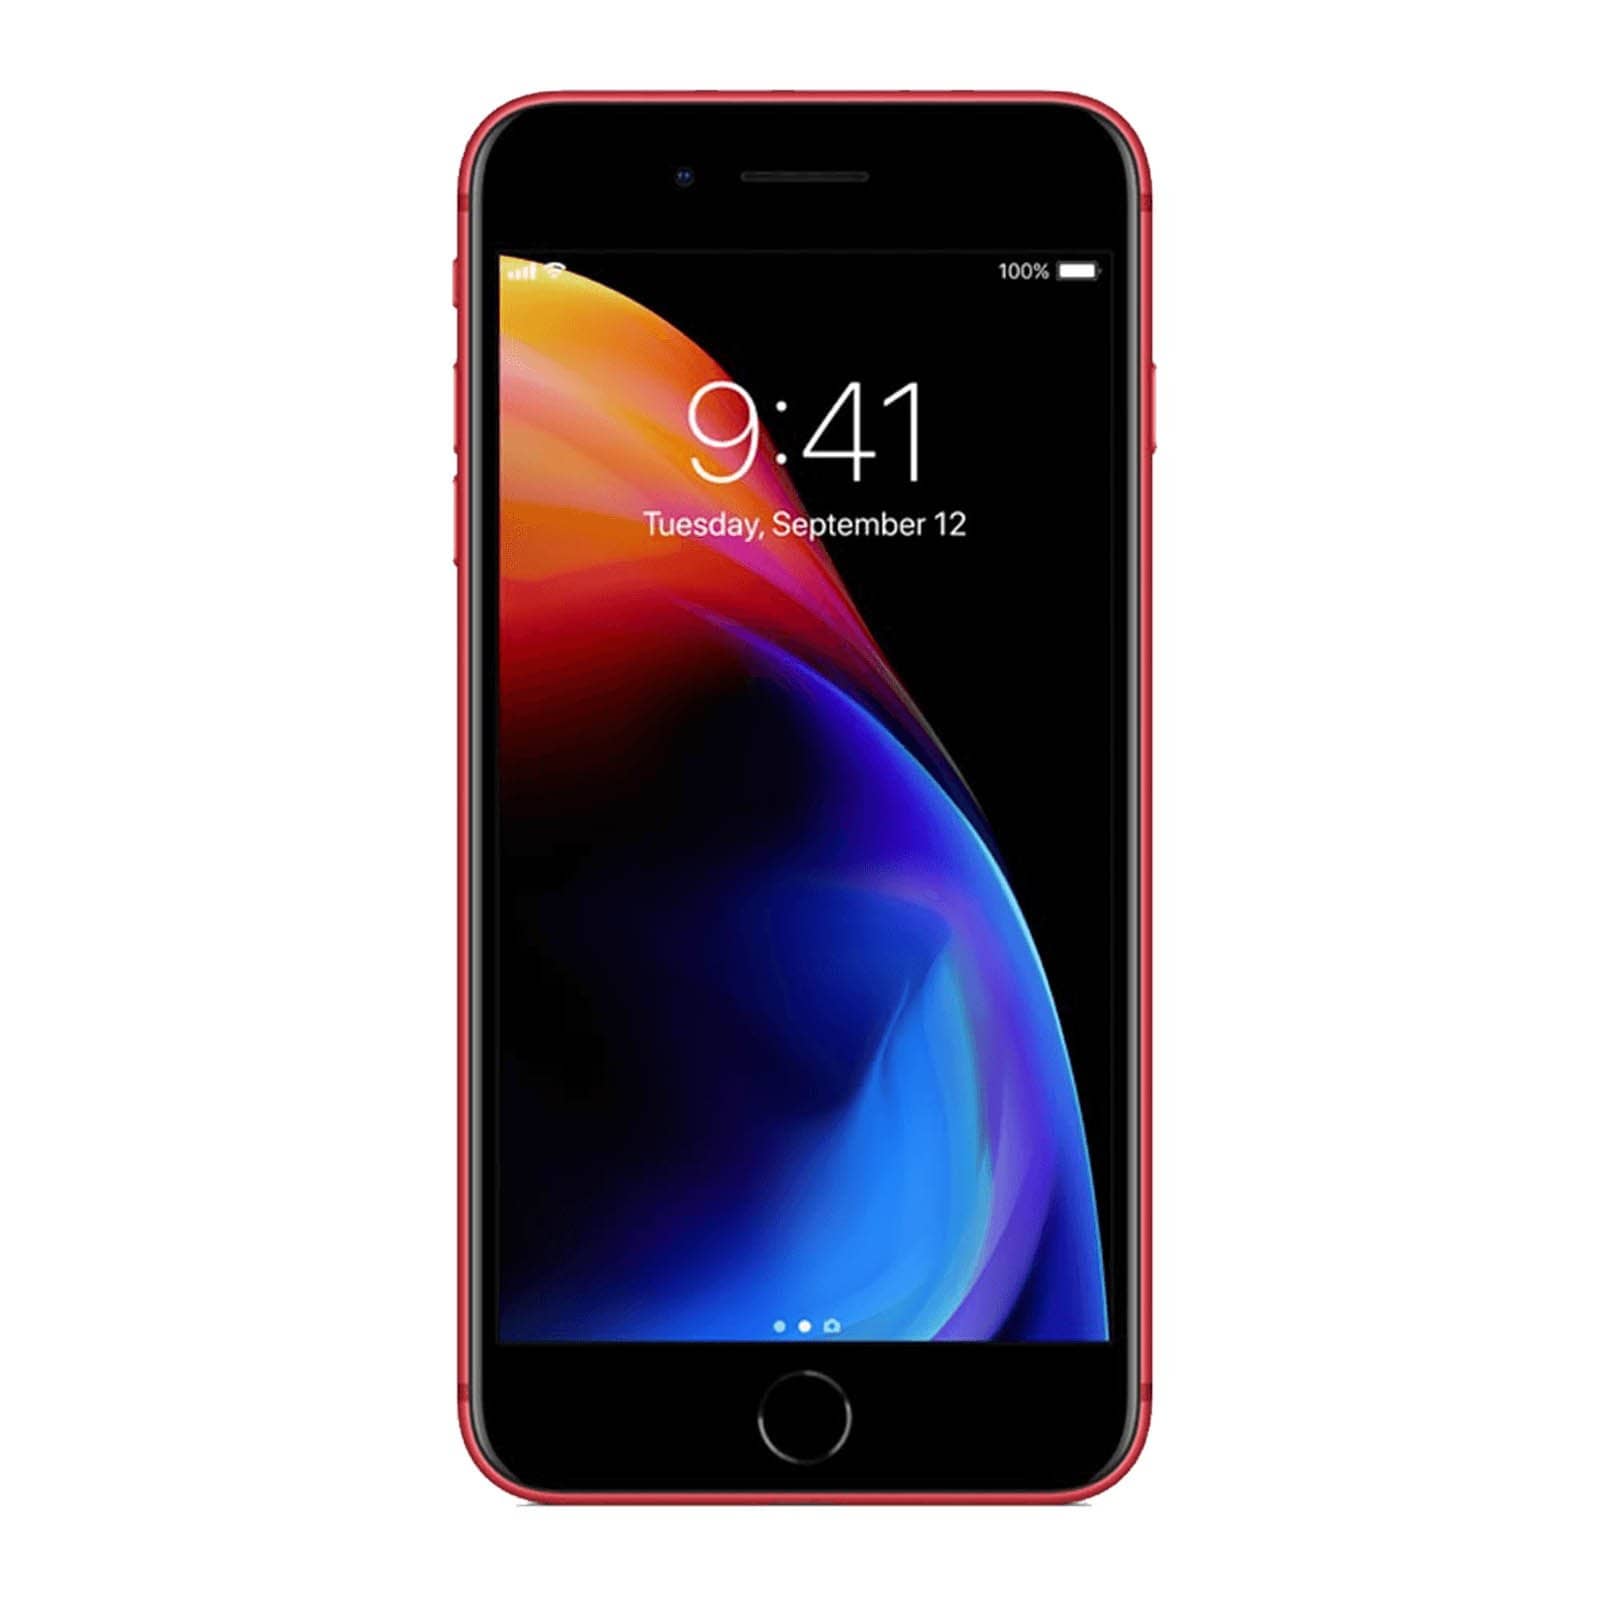 Apple iPhone 8 Plus 256GB Product Red Fair - Unlocked